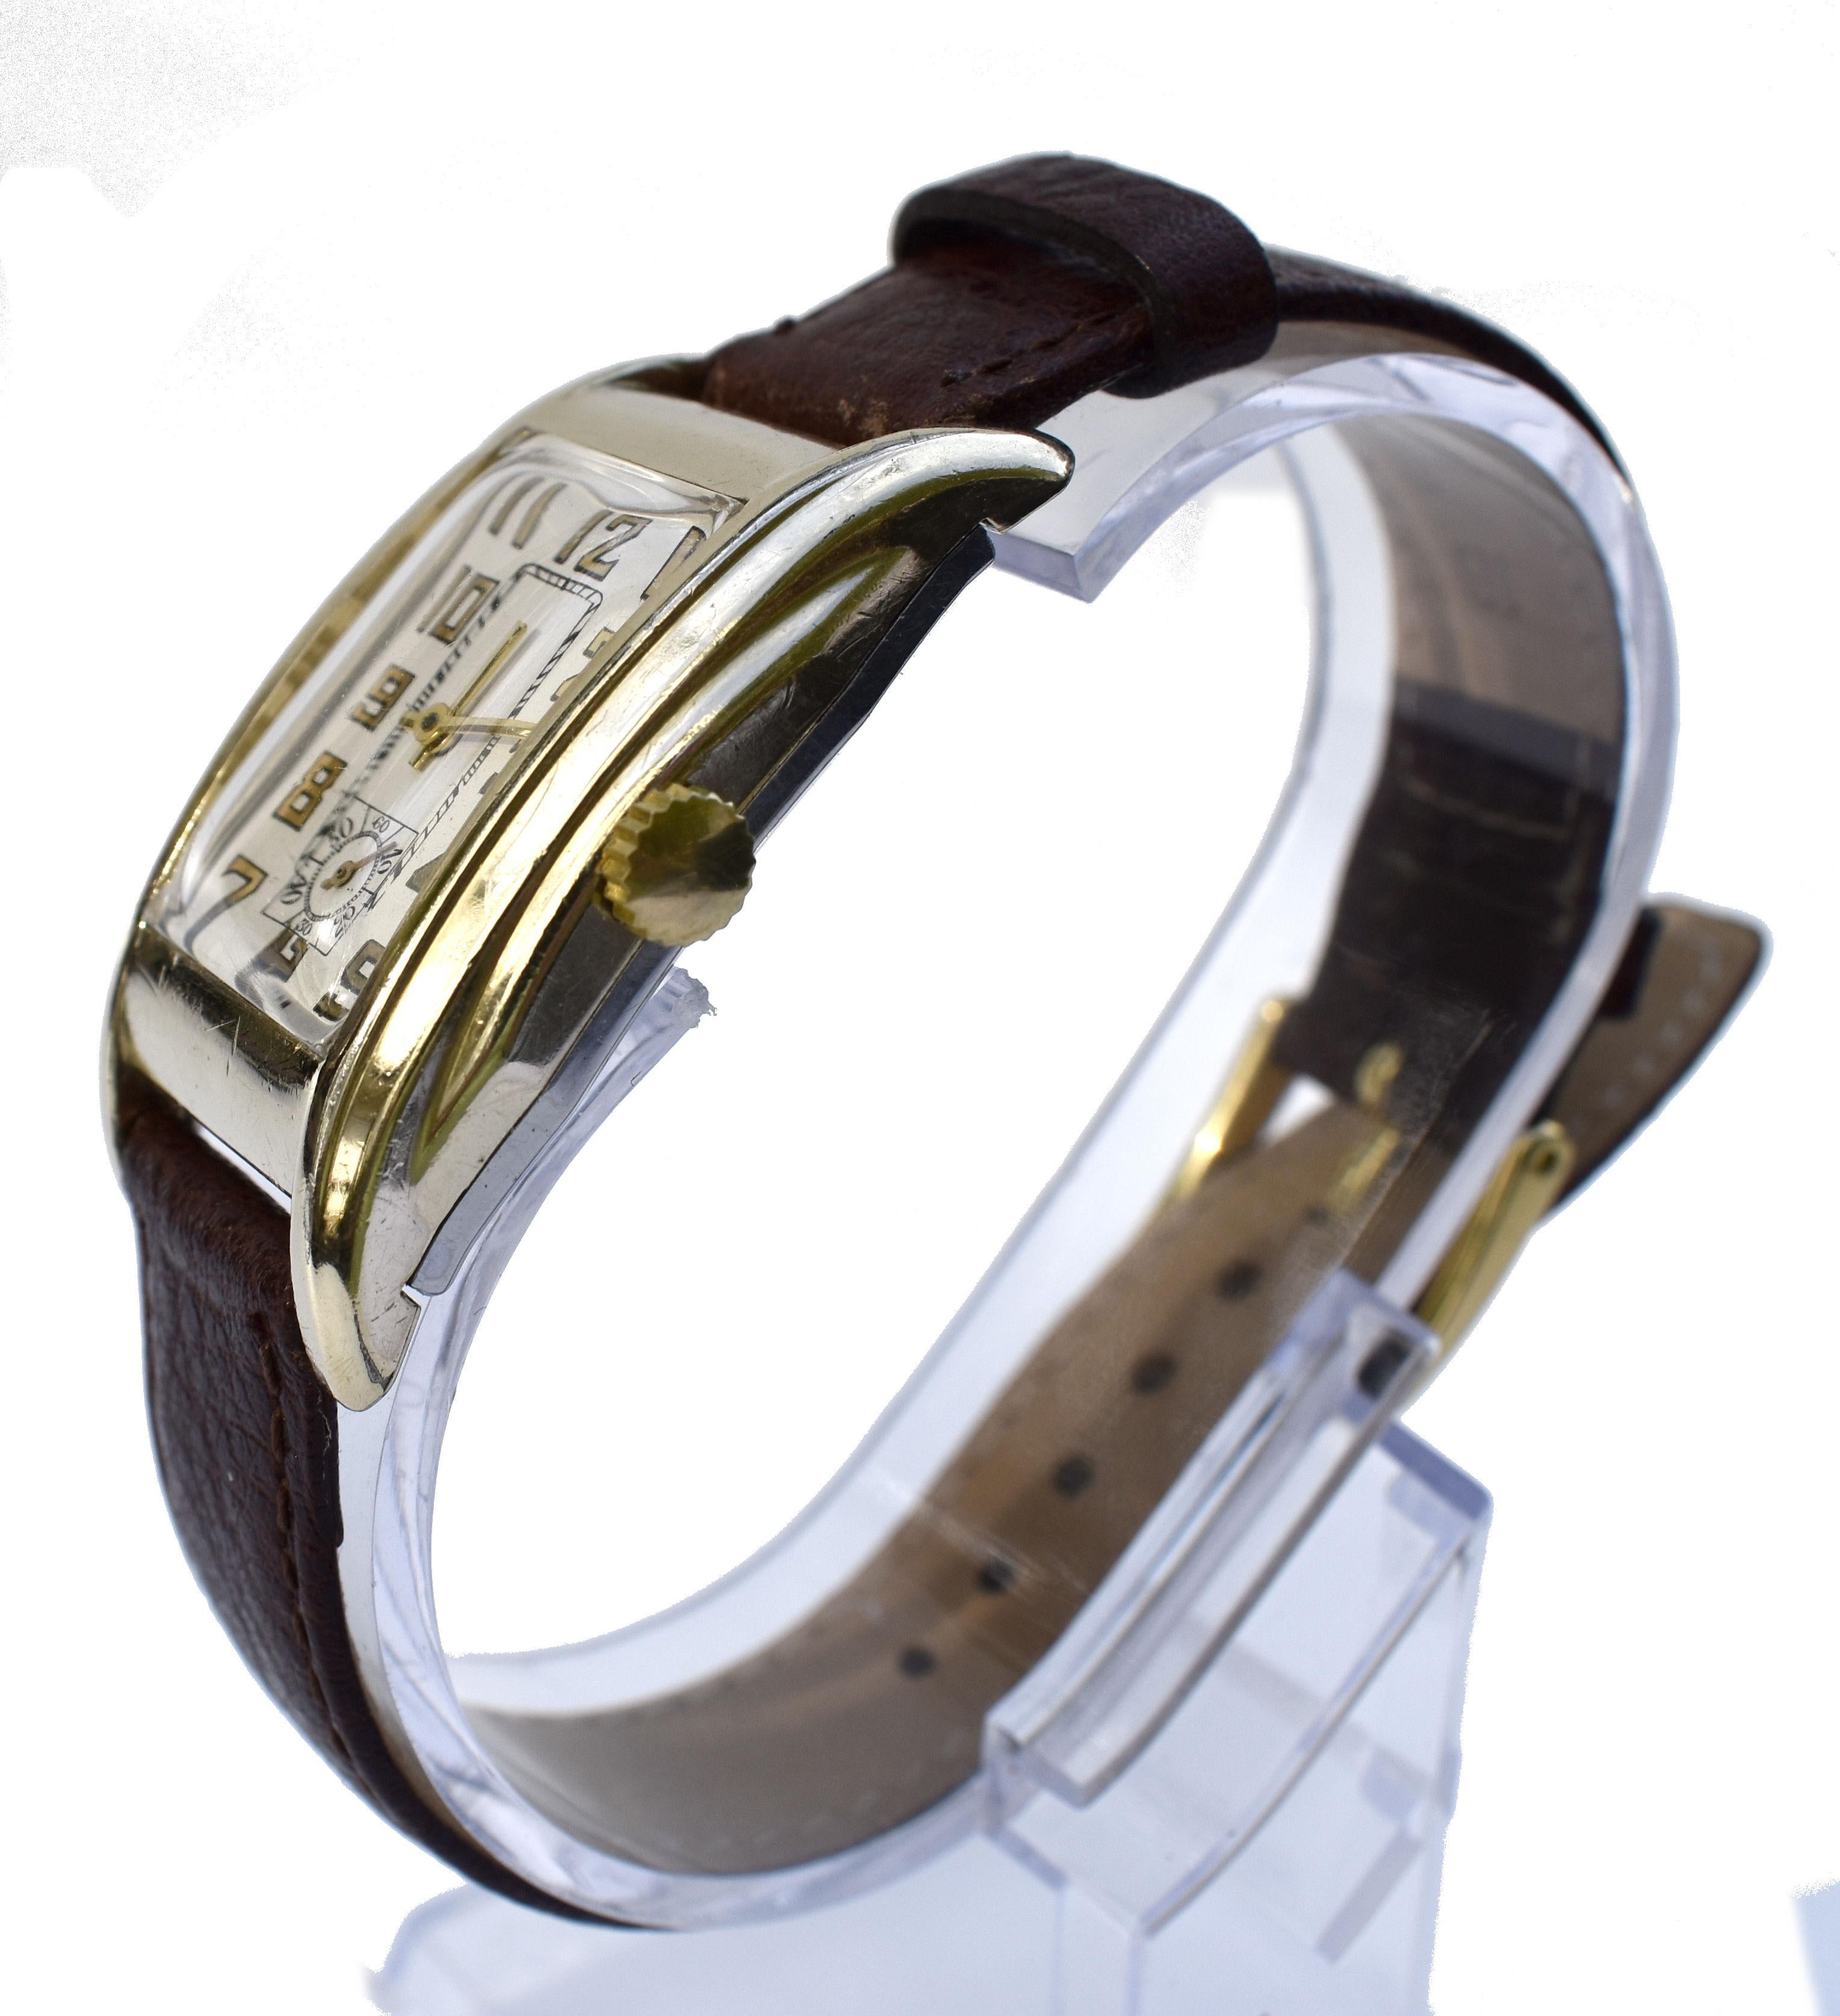 Men's Art Deco Gents 10k Gold Filled Gruen Swiss Watch, Fully Serviced, c1930's